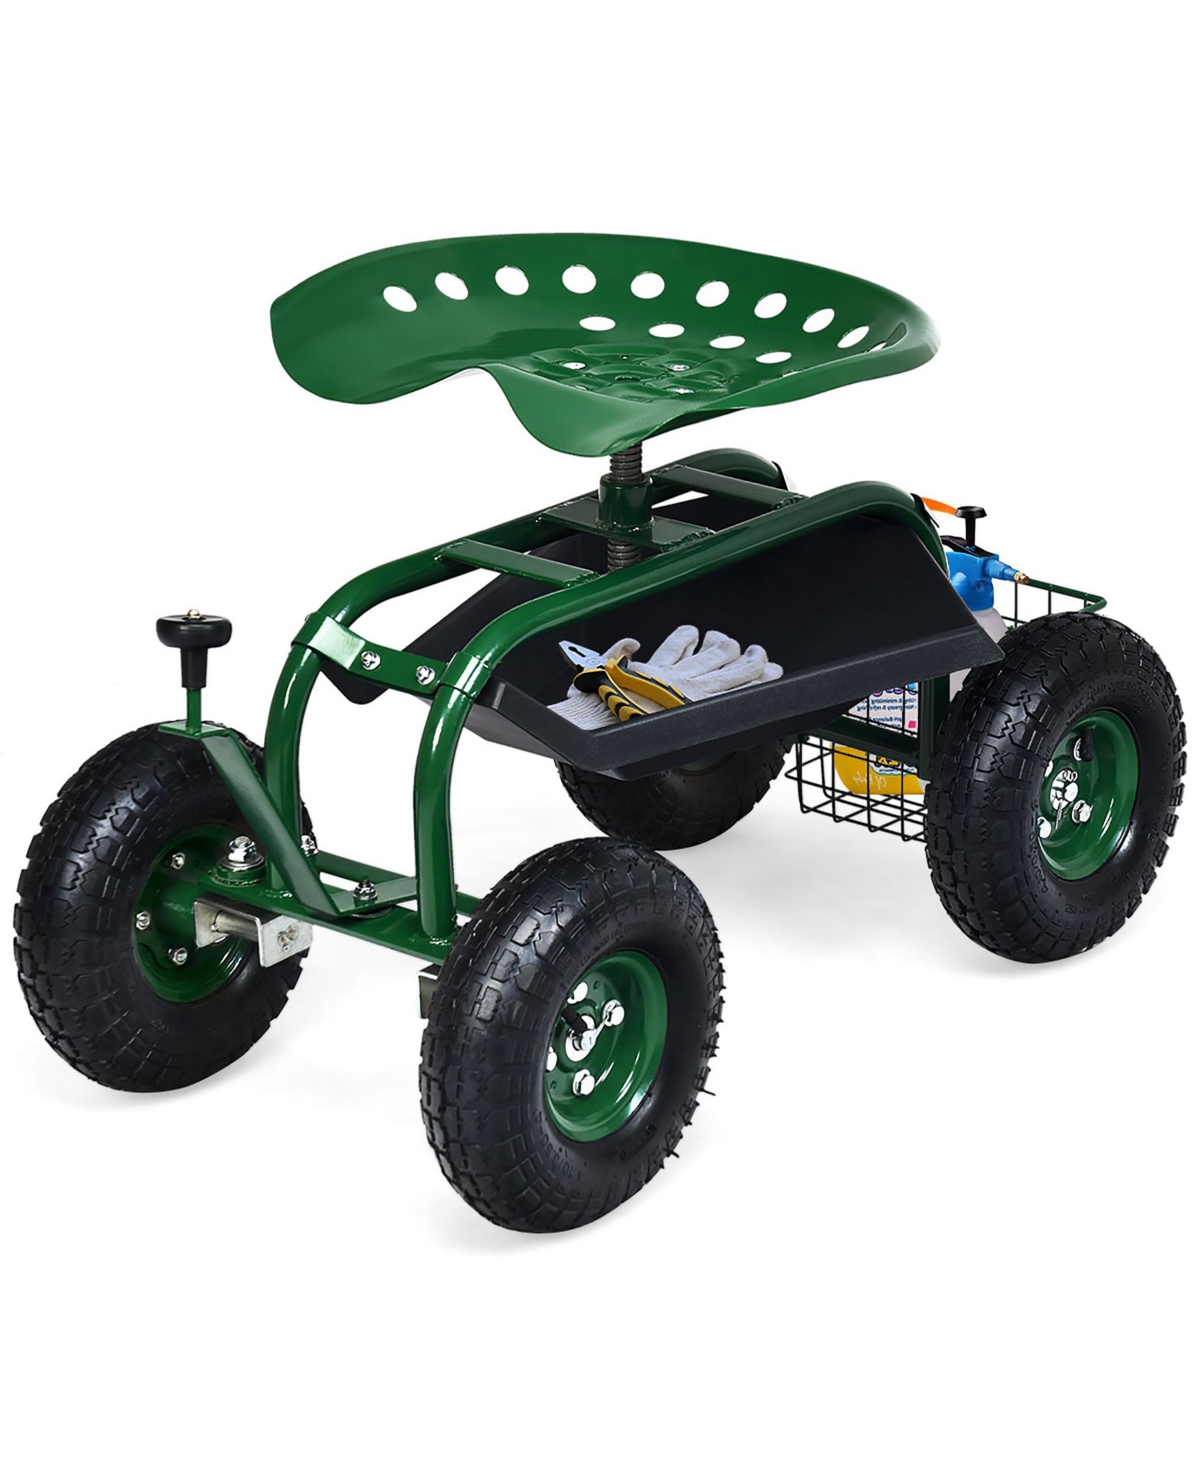 Garden Cart Rolling Work Seat w/ Tool Tray Basket - Green